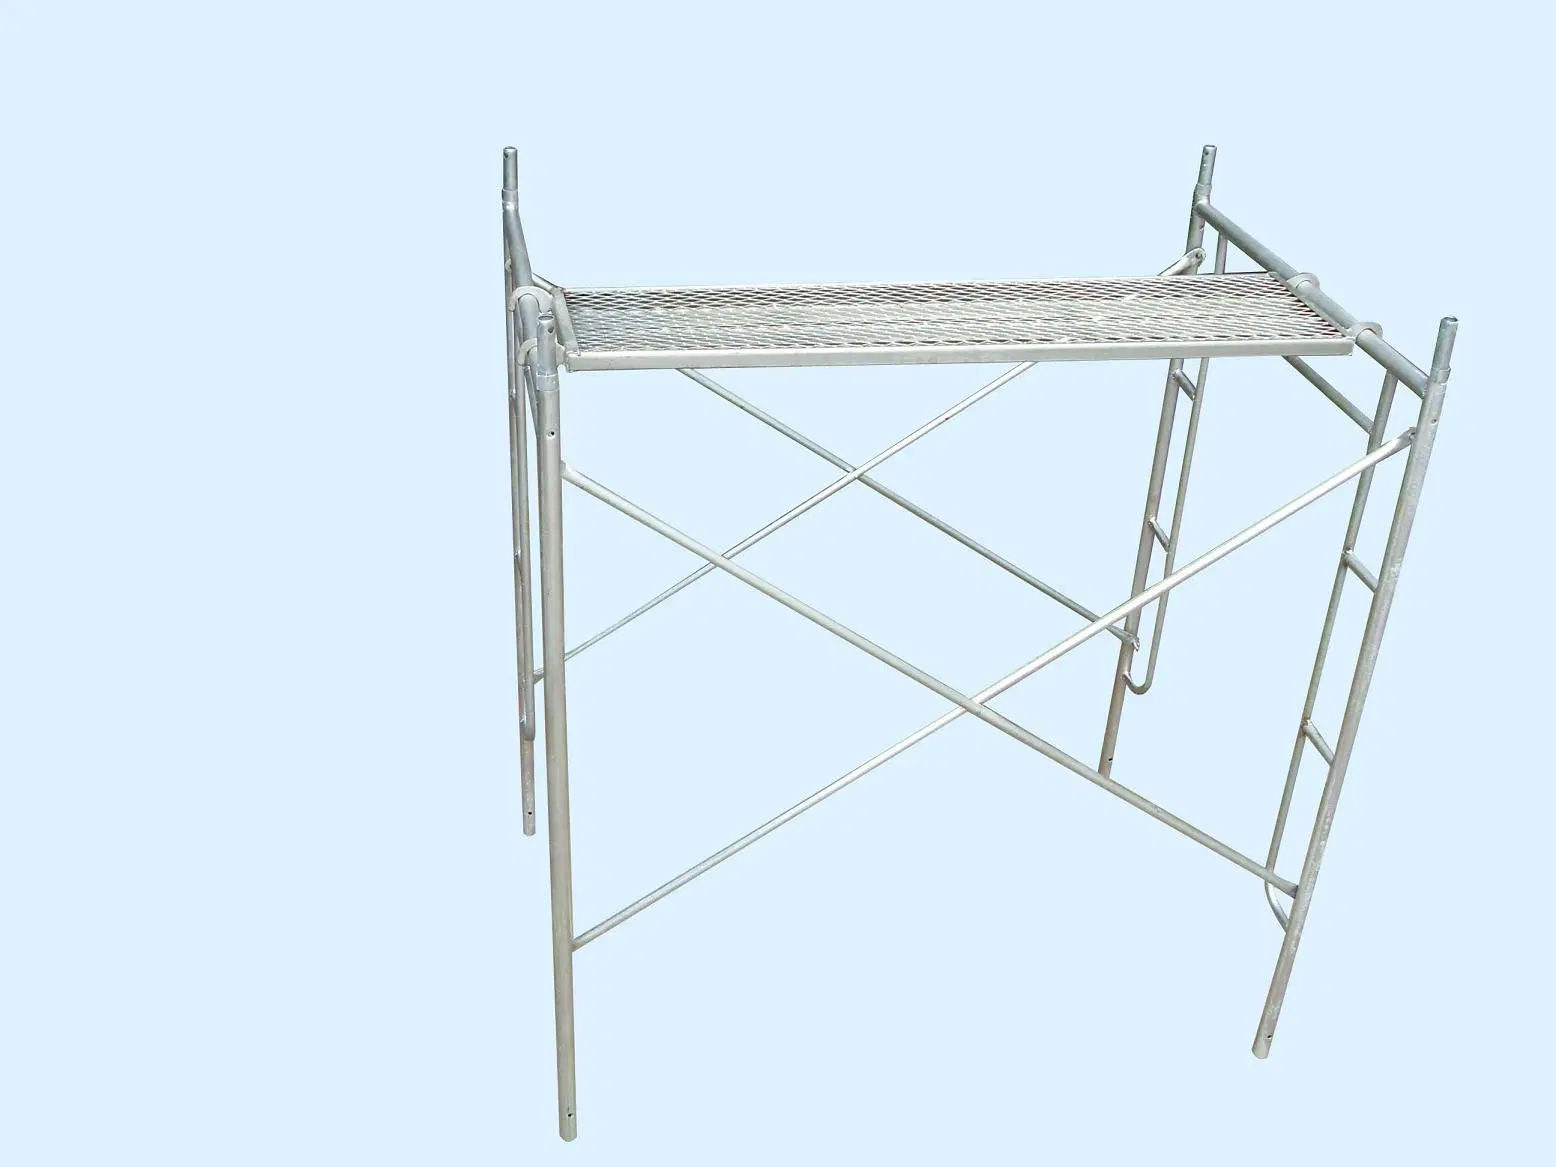 Ladder Style Scaffolding Formwork Construction Strong Steel Ladder Frame